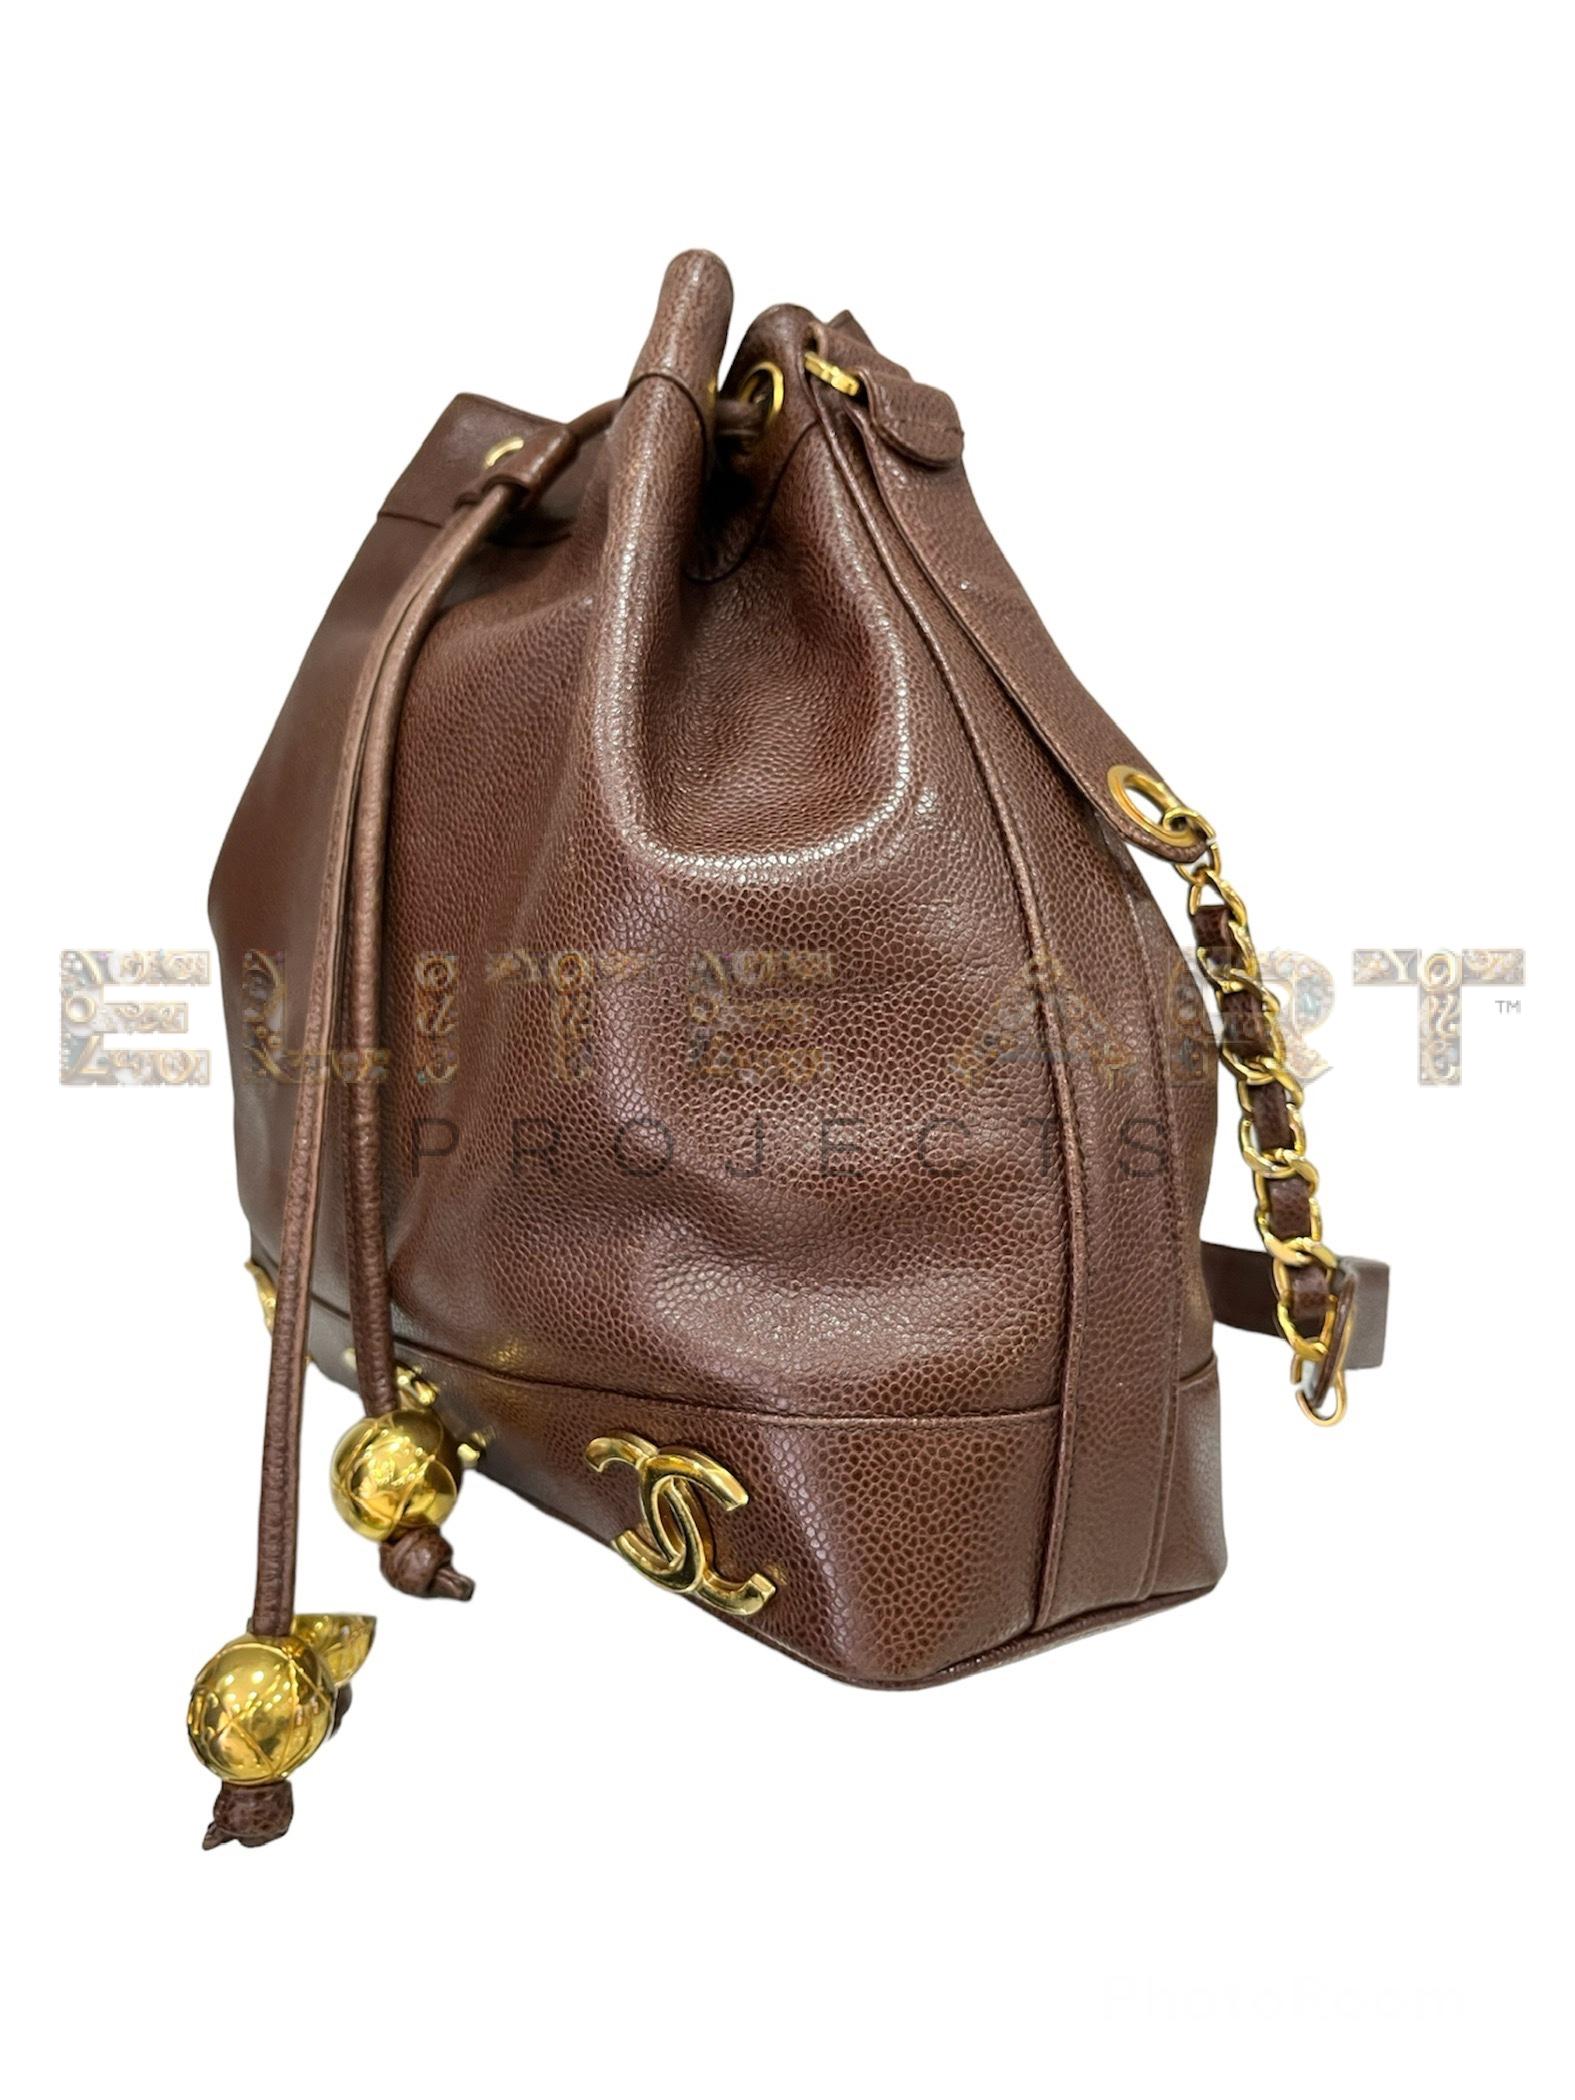 Chanel, vintage, bucket bag, brown leather, gold hardware, drawstring closure, spacious interior, 90s